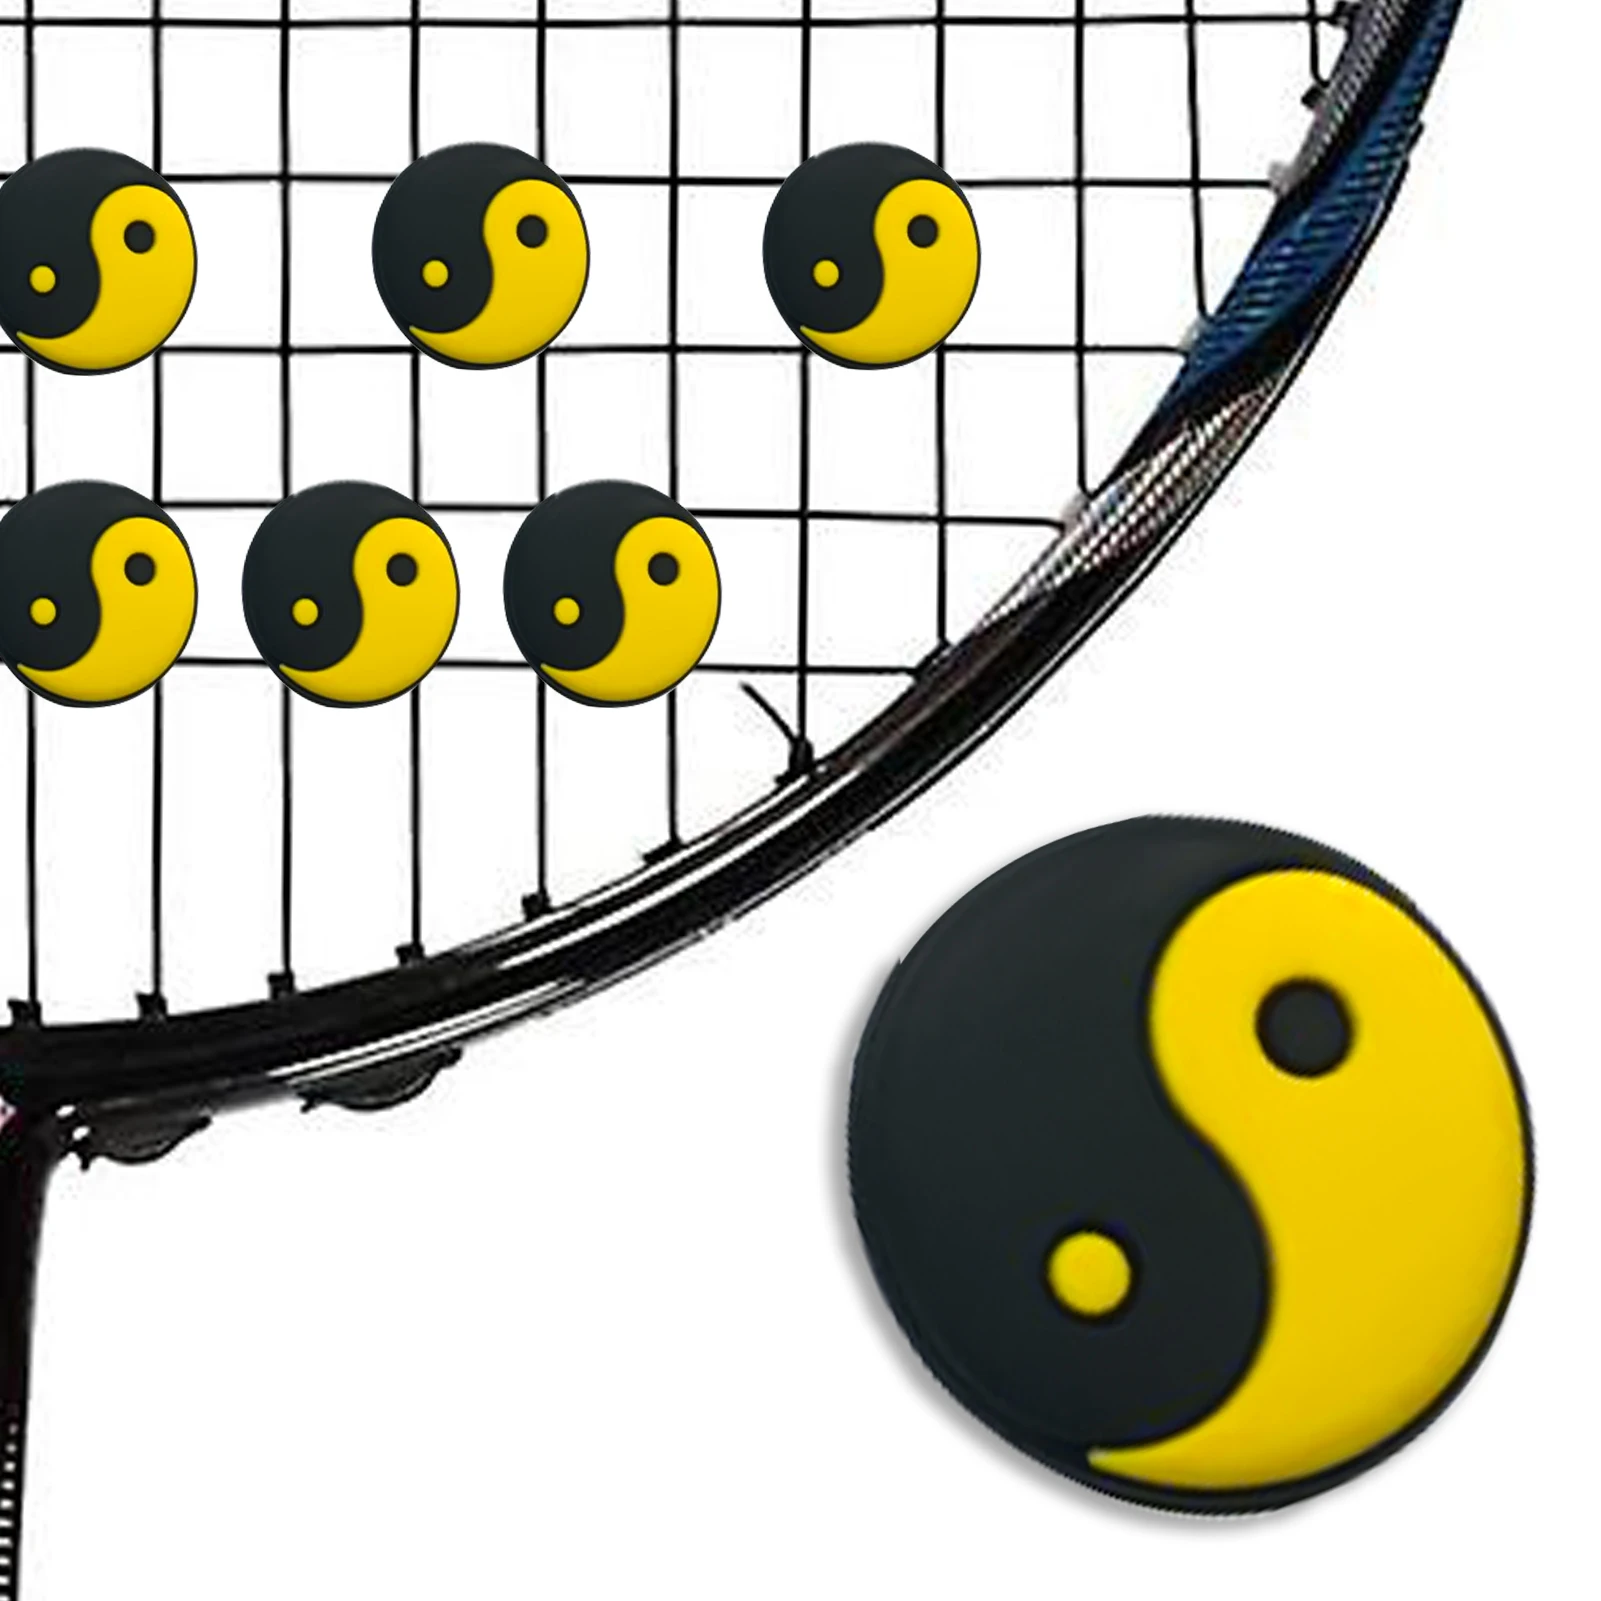 Amortiguador de vibración para raqueta de tenis, almohadilla de silicona a prueba de golpes, cara sonriente, antivibración, accesorios de tenis